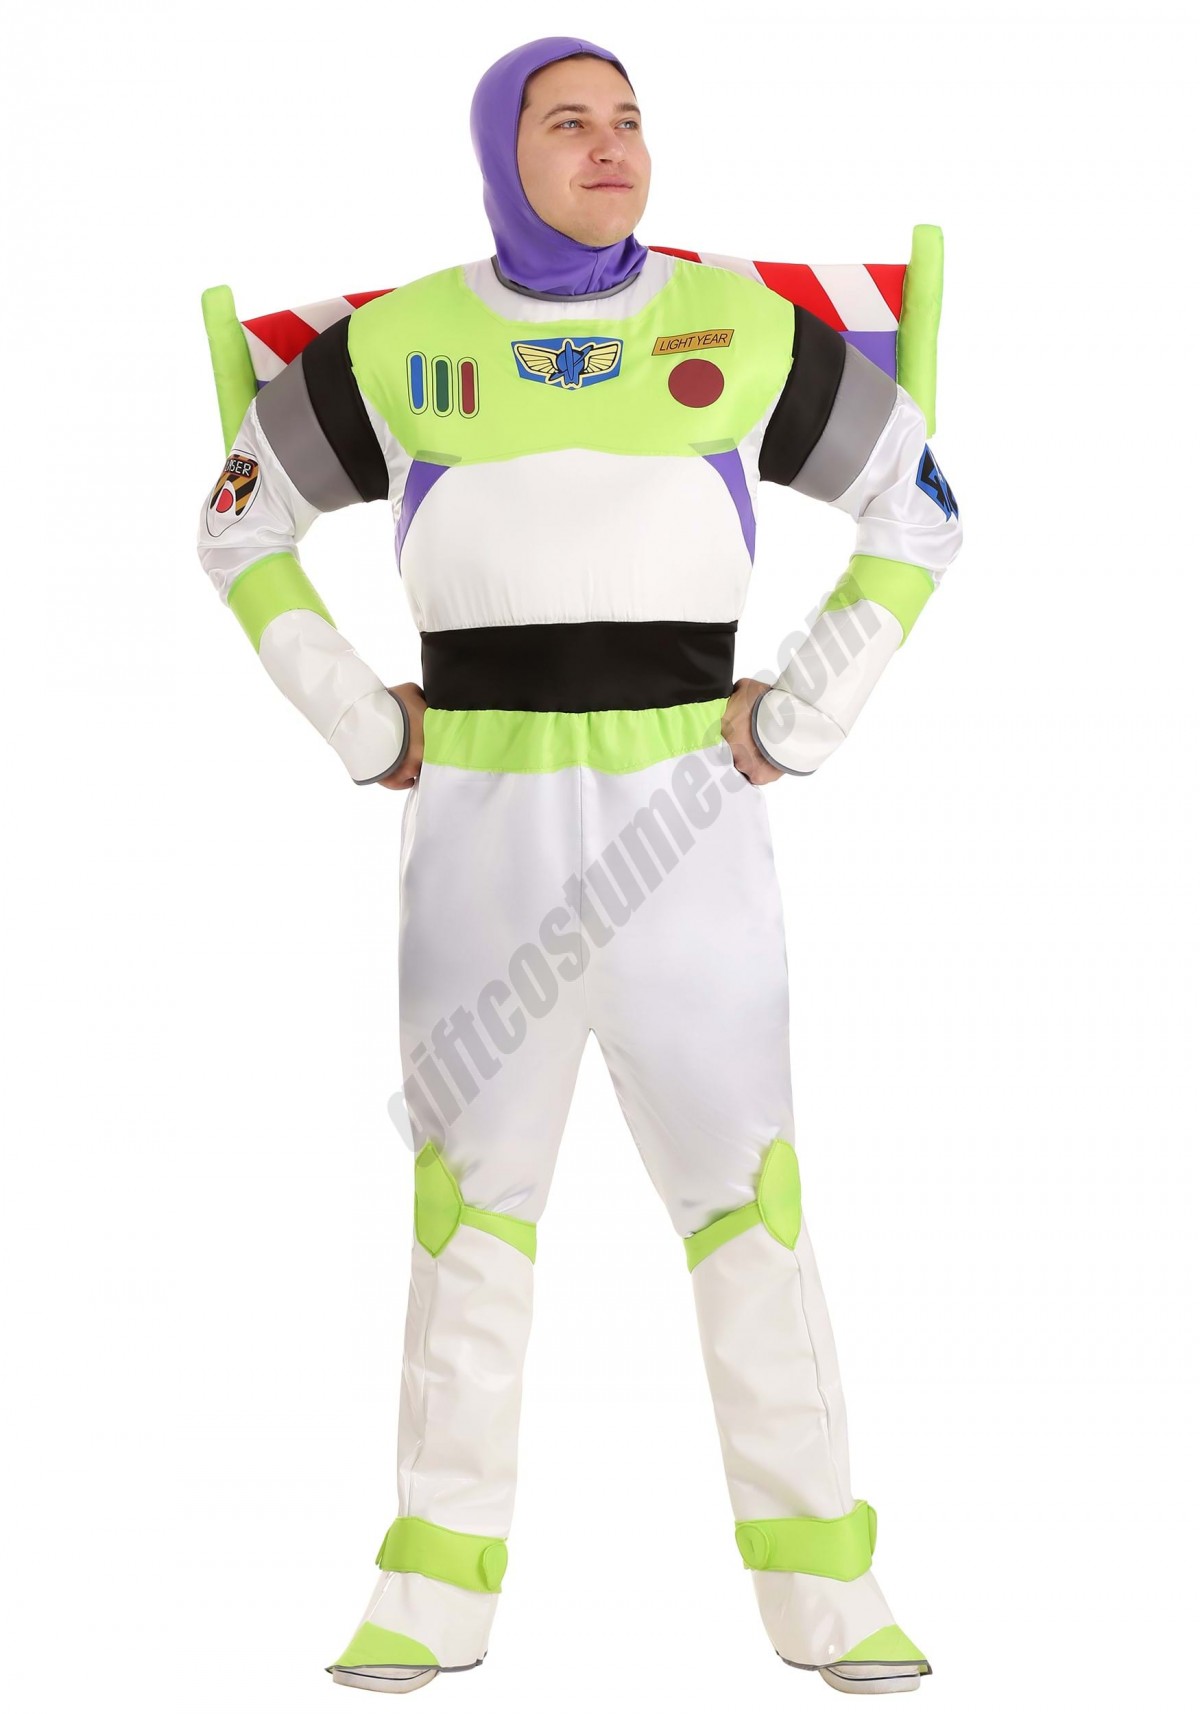 Prestige Buzz Lightyear Costume for Adult Men Promotions - -0